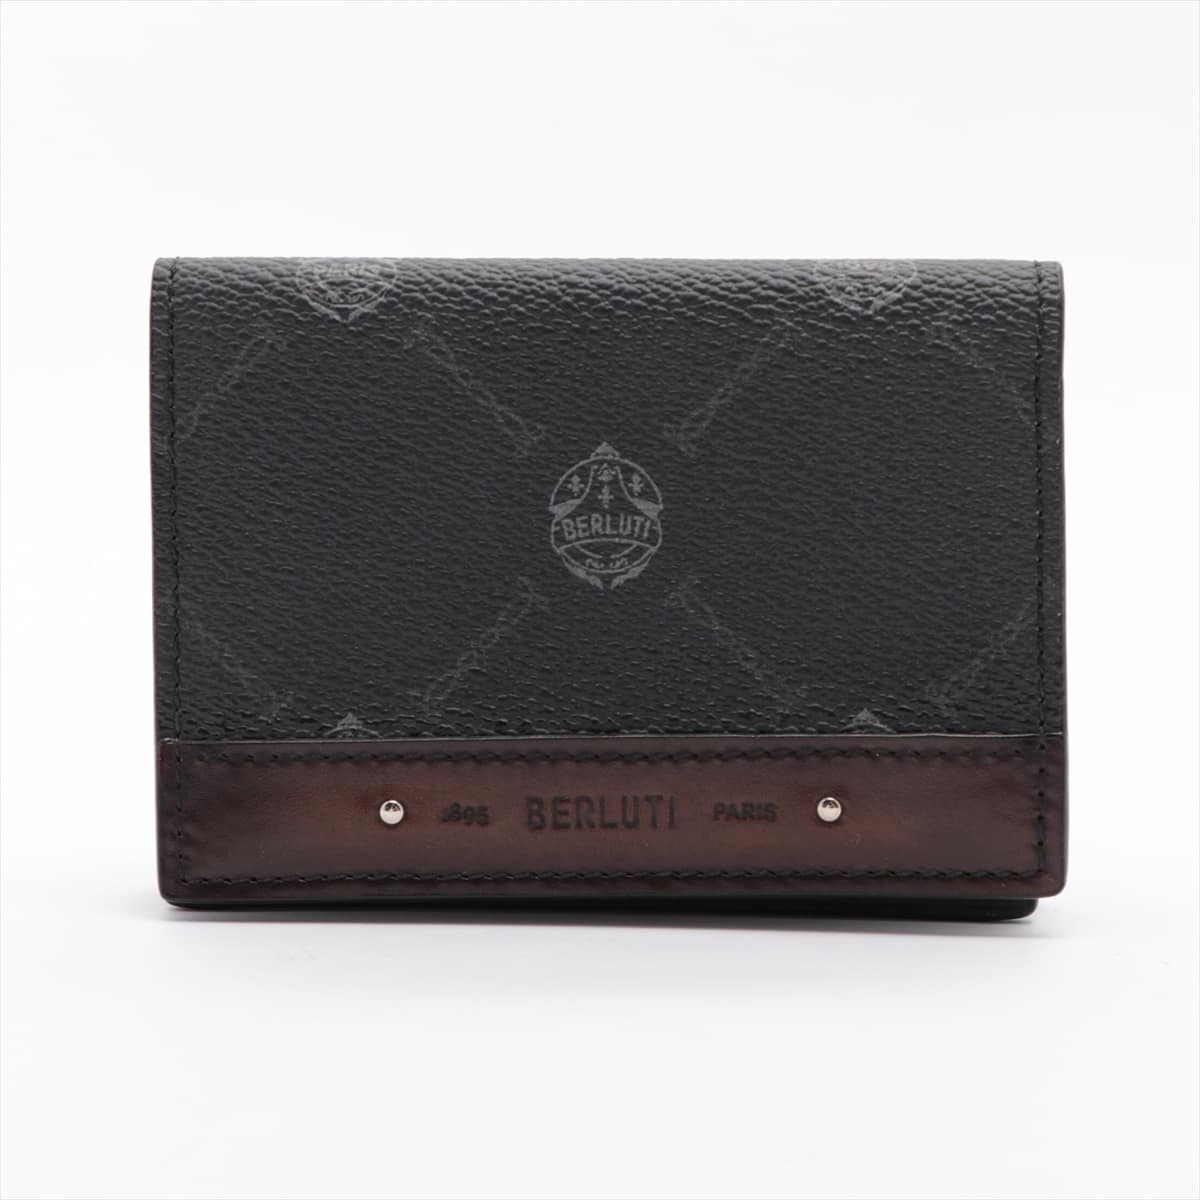 Berluti PVC & leather Card Case Black Pocket scratches